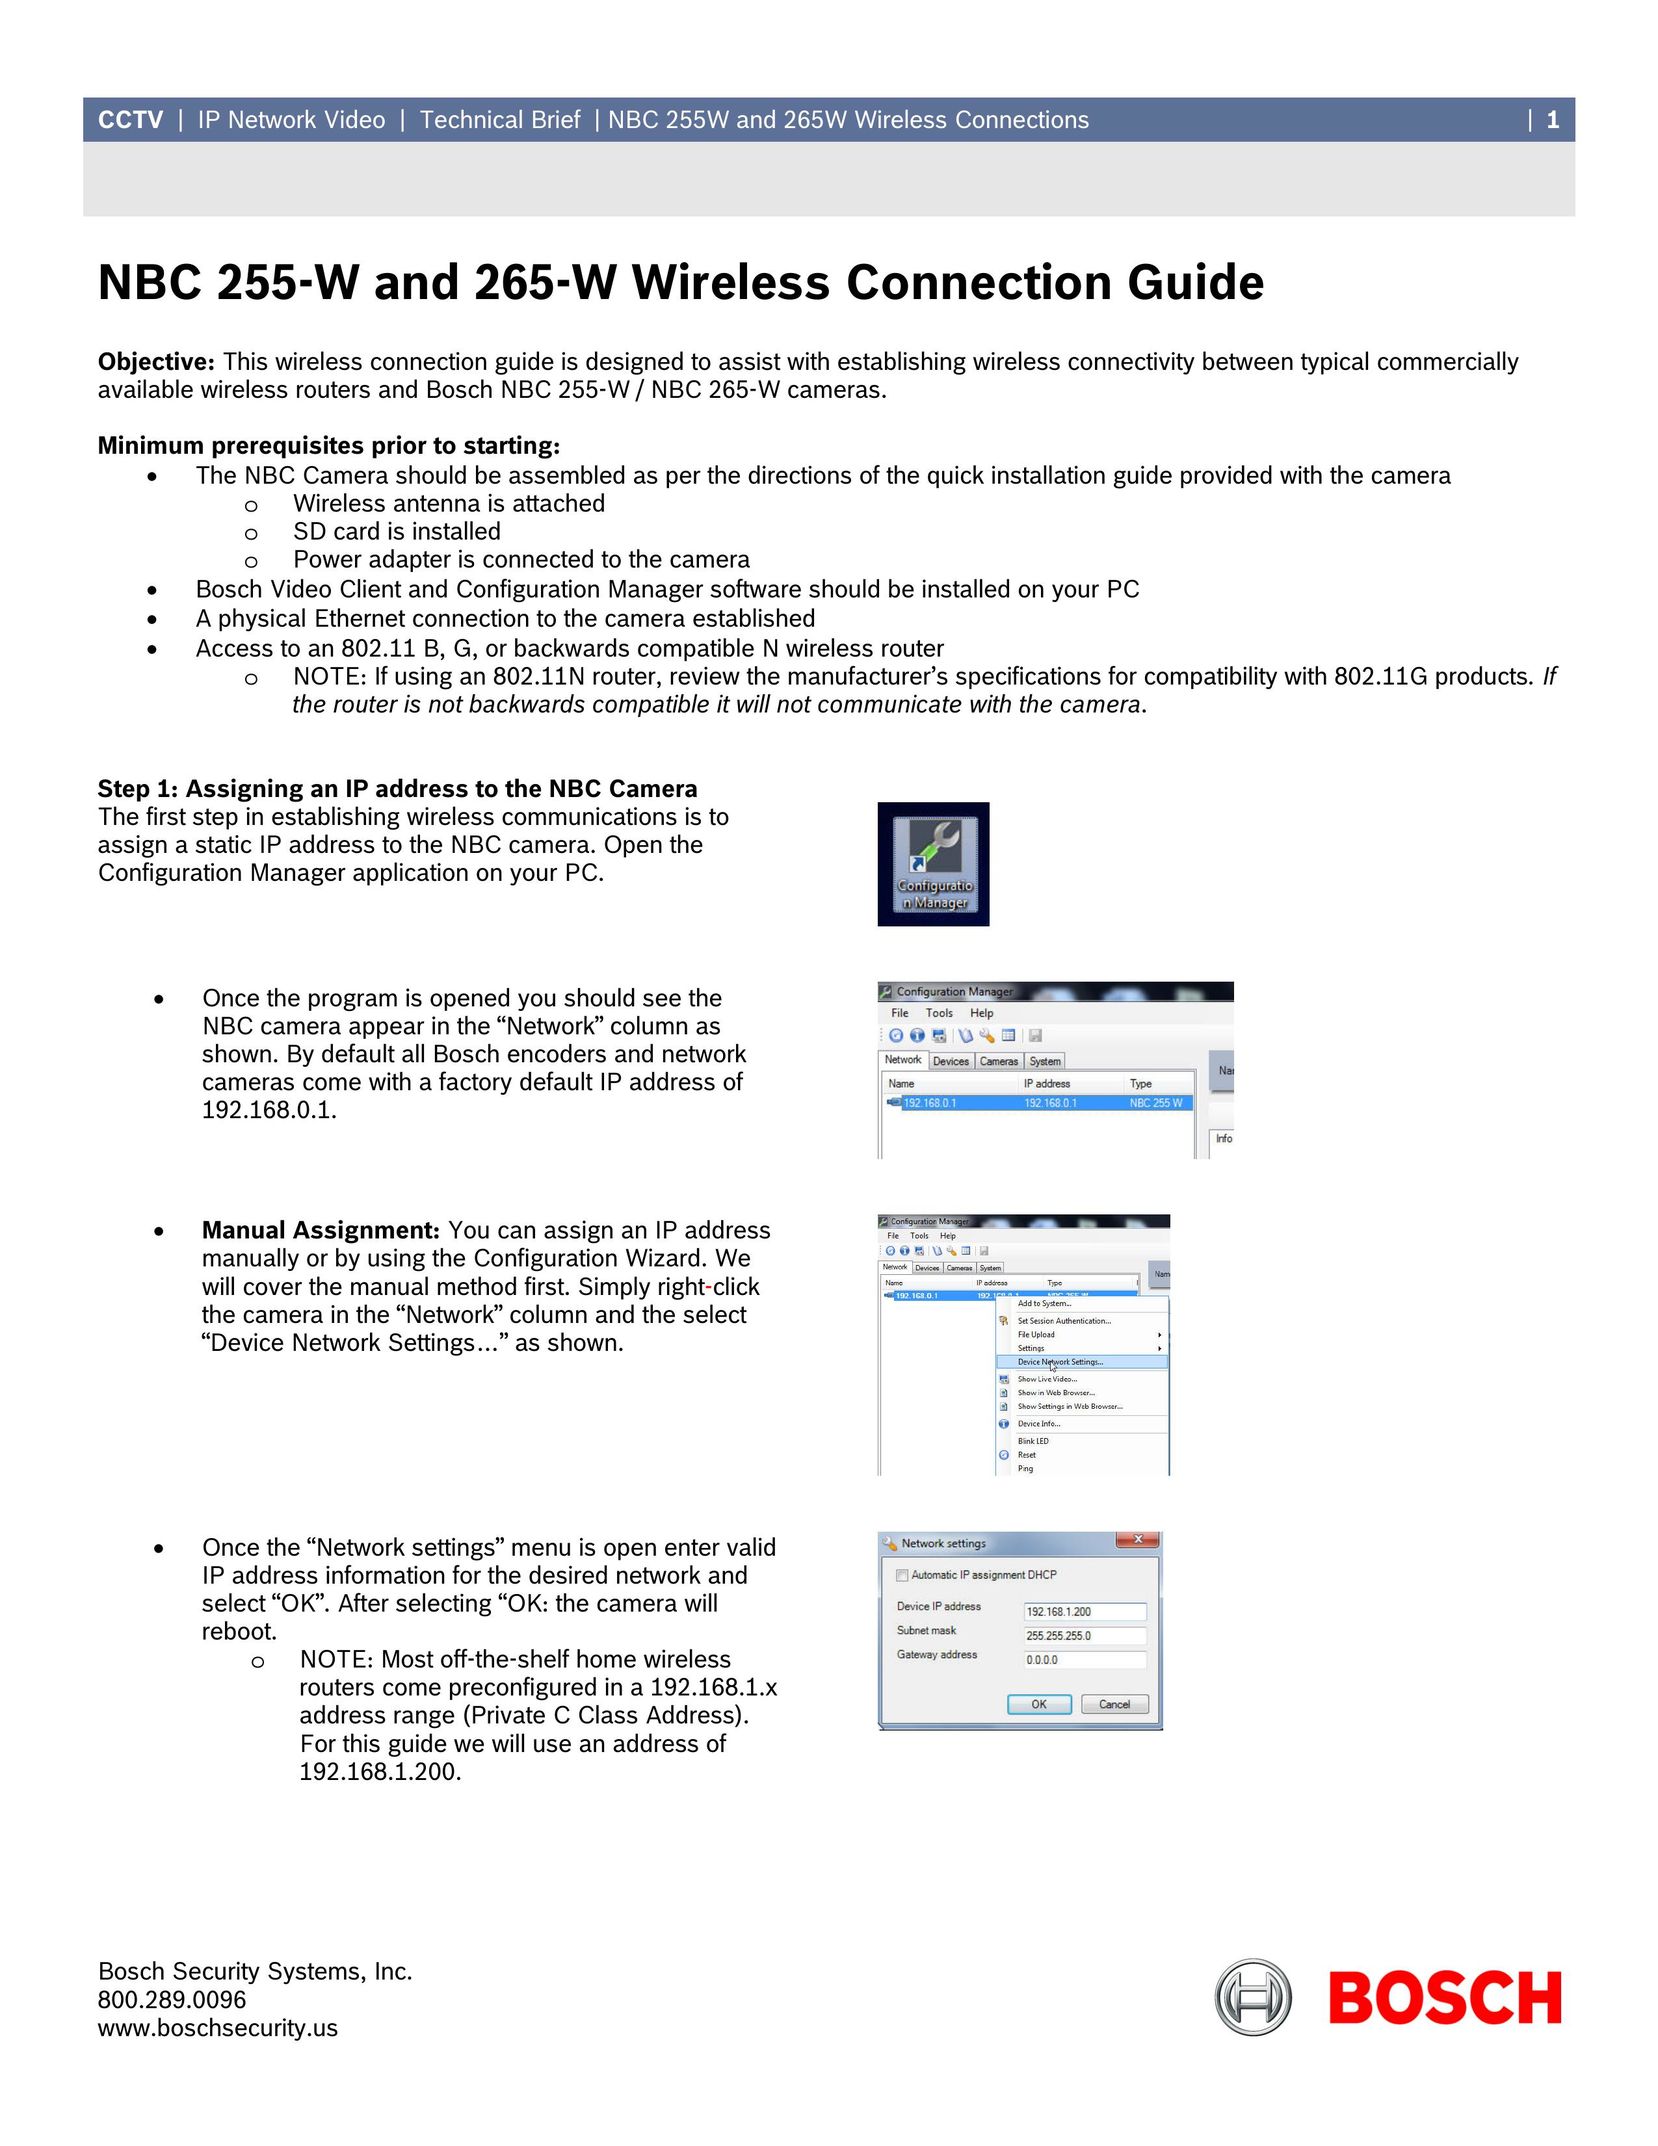 Bosch Appliances NBC Network Hardware User Manual